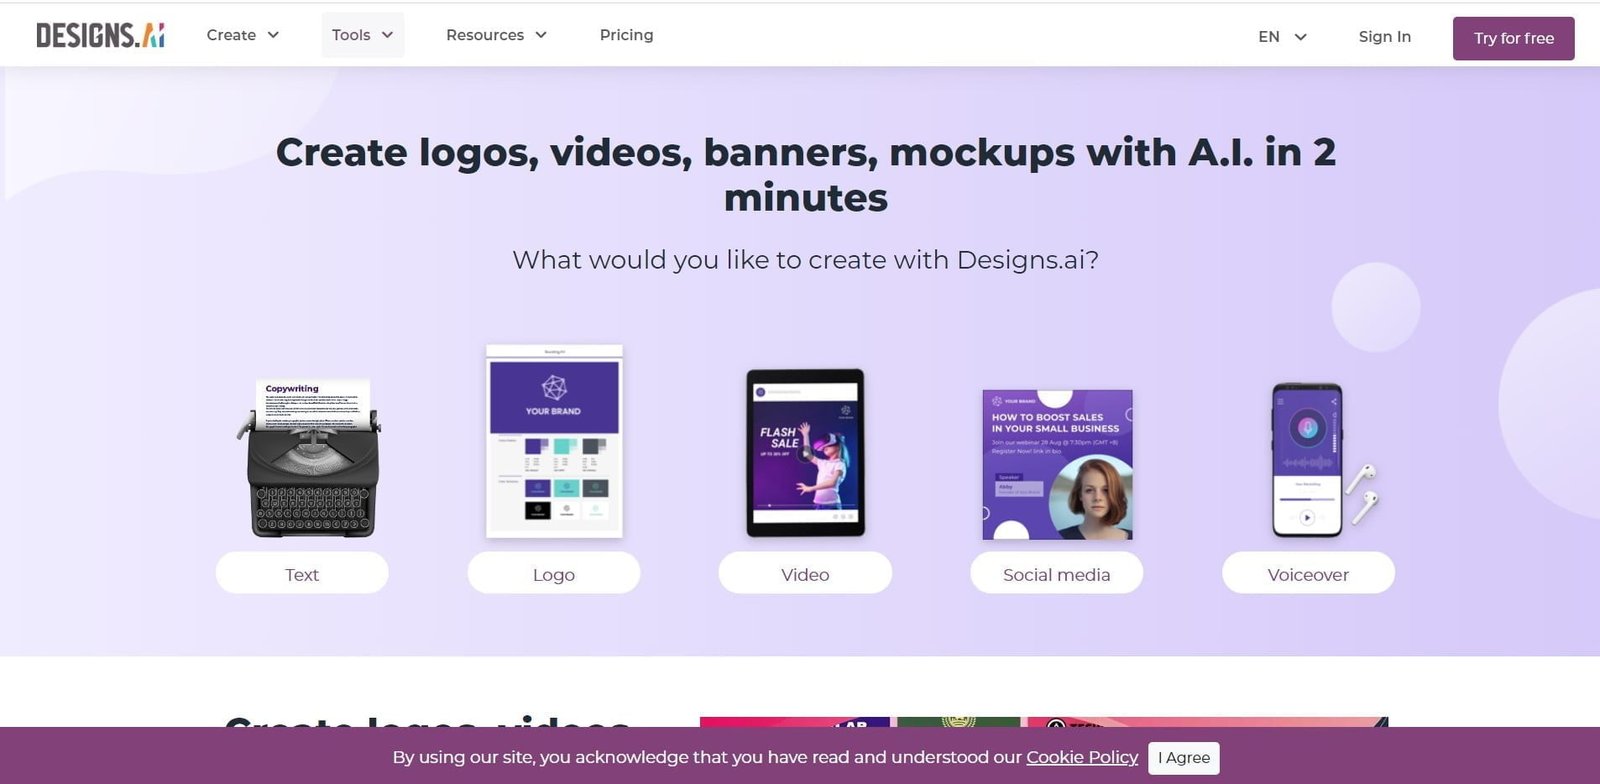 Design.ai is an AI design tool that can help you create logos